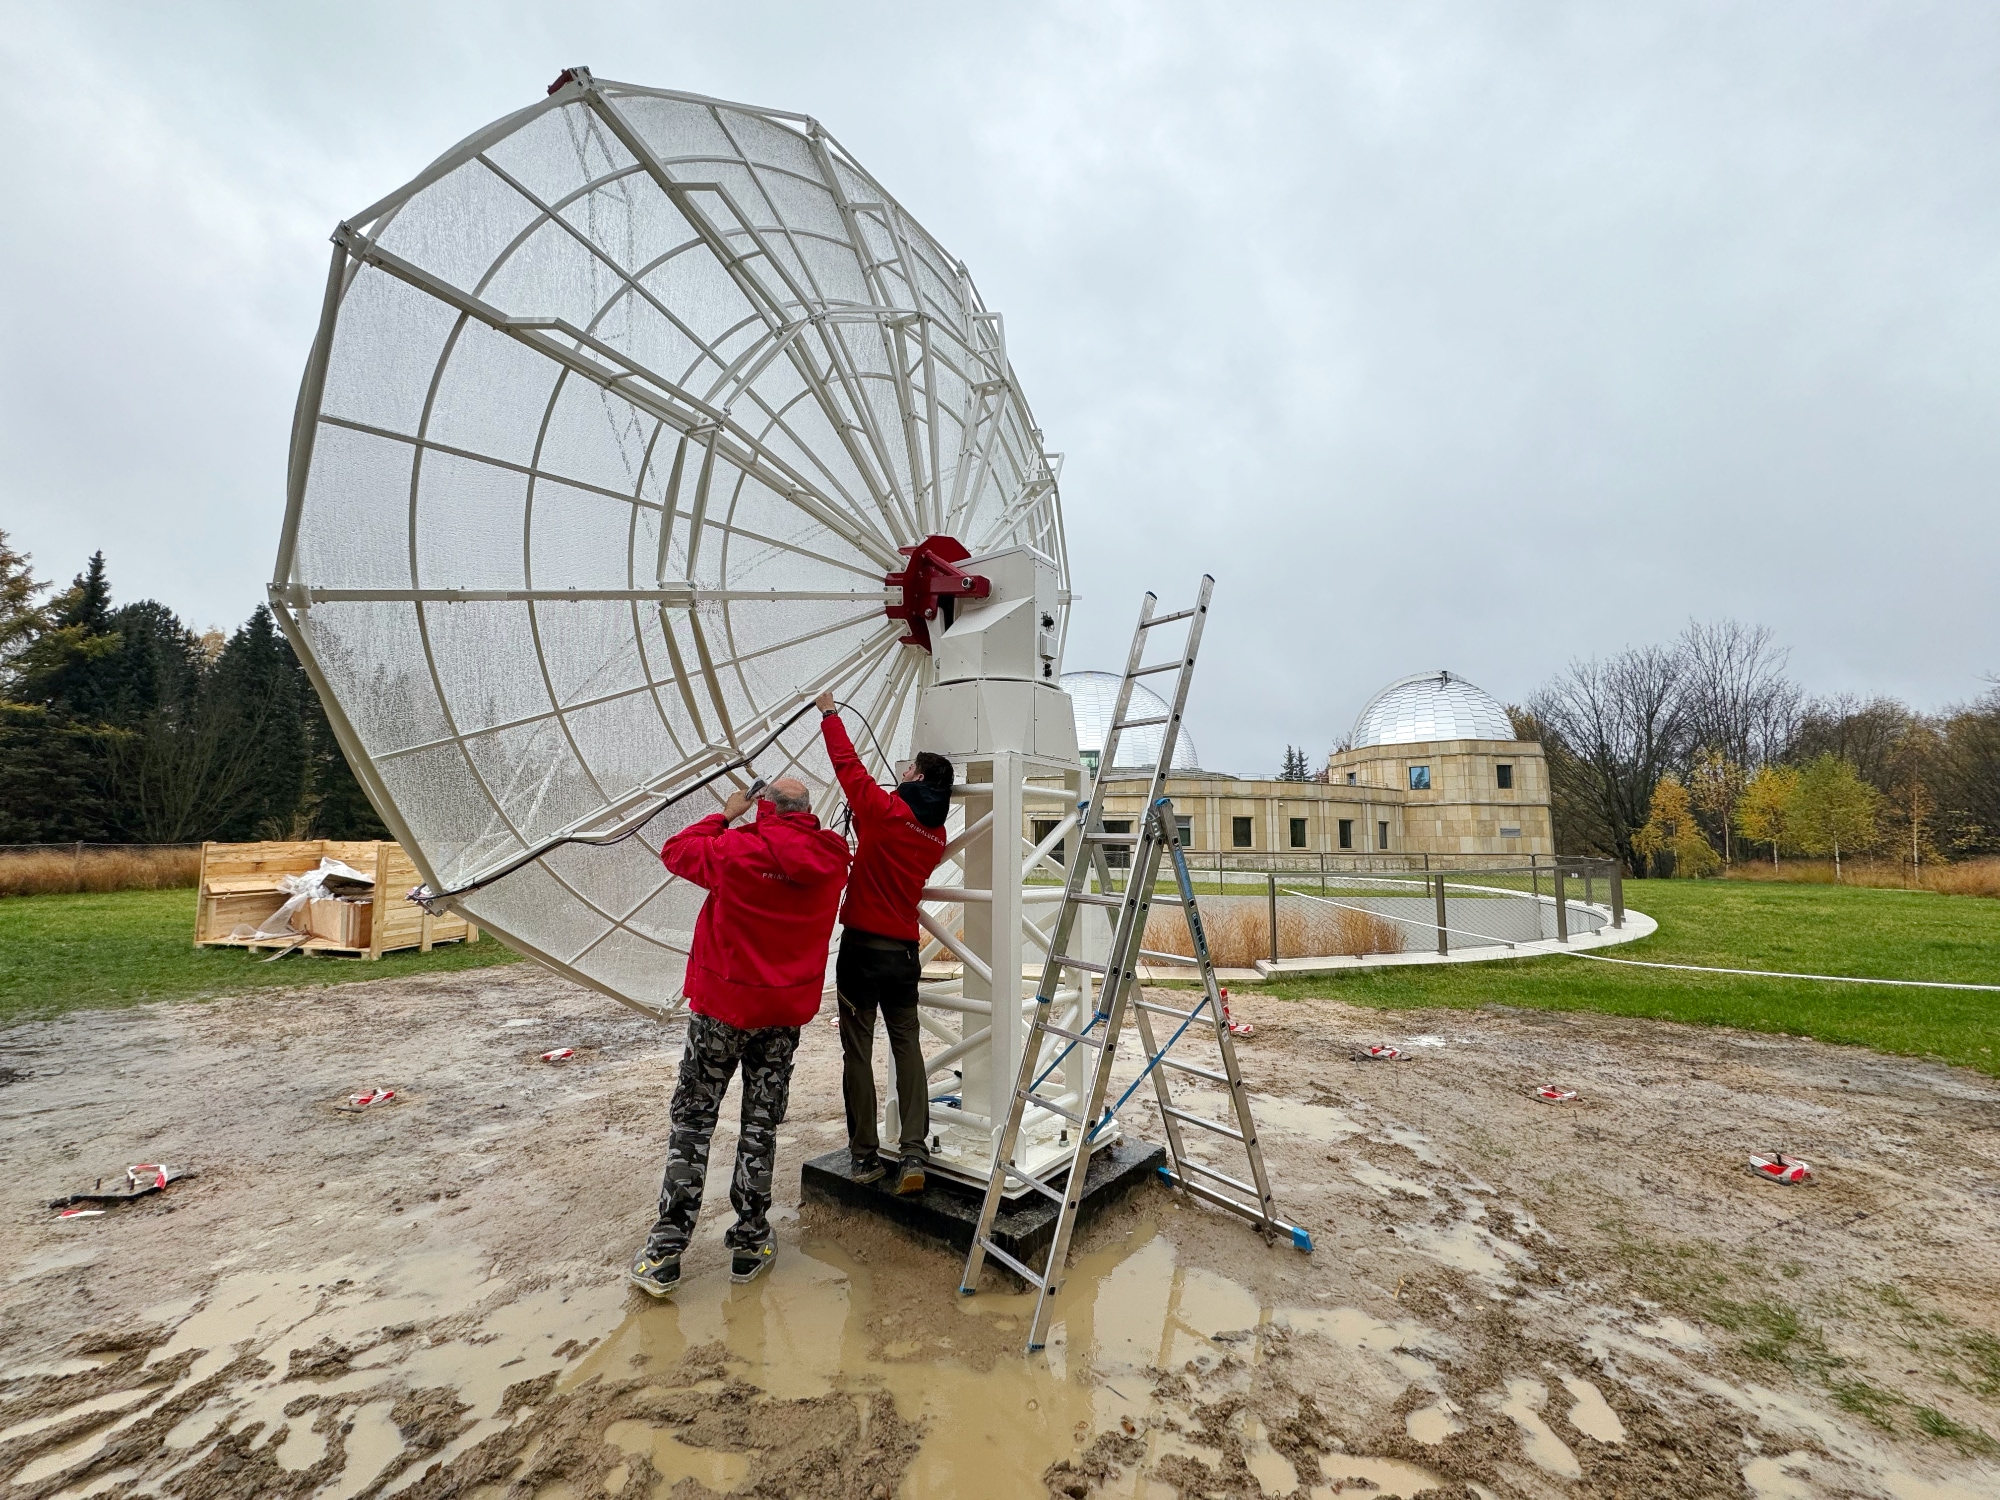 Radiotelescopio SPIDER 500A MarkII installato al Planetarium - Silesian Science Park (Polonia)